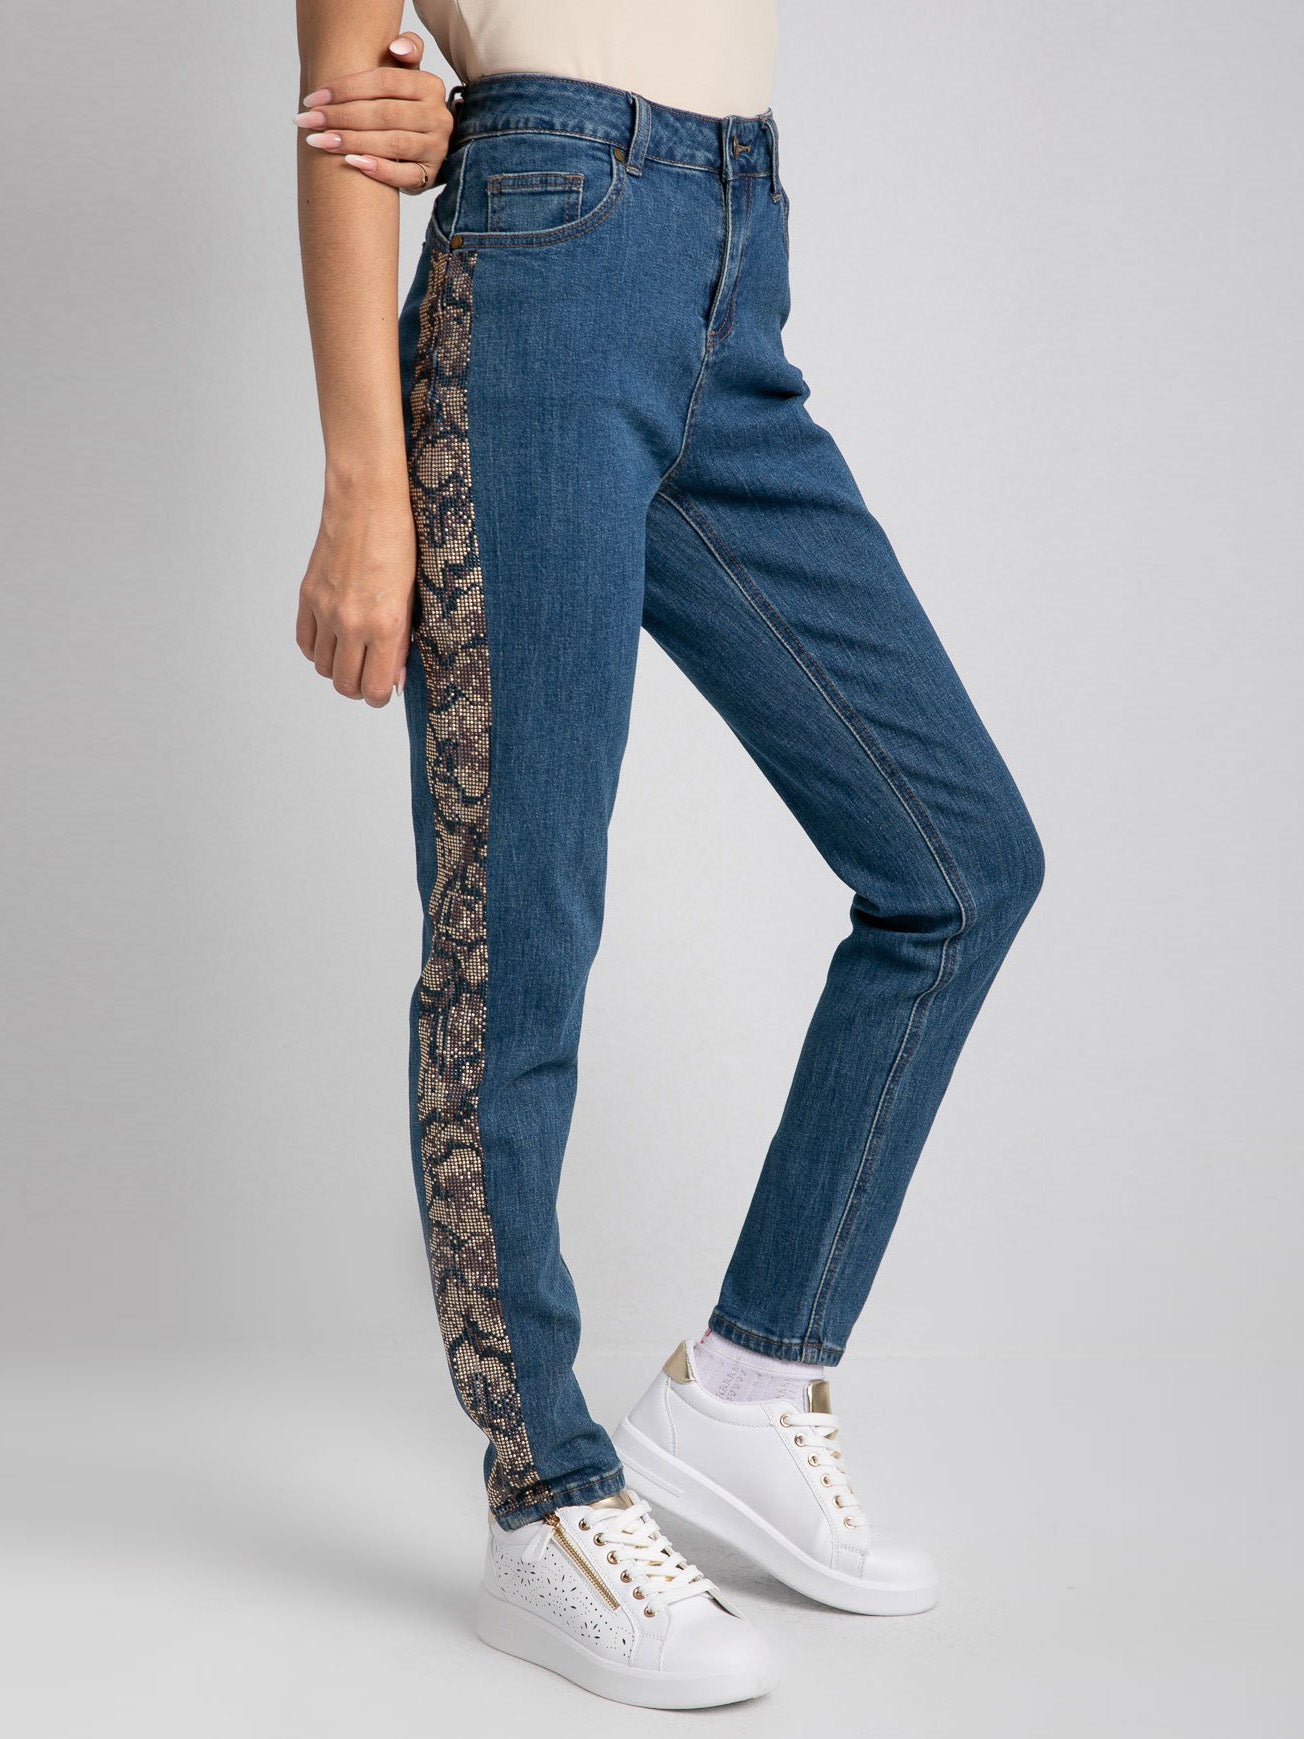 Jeans - Side Patterned